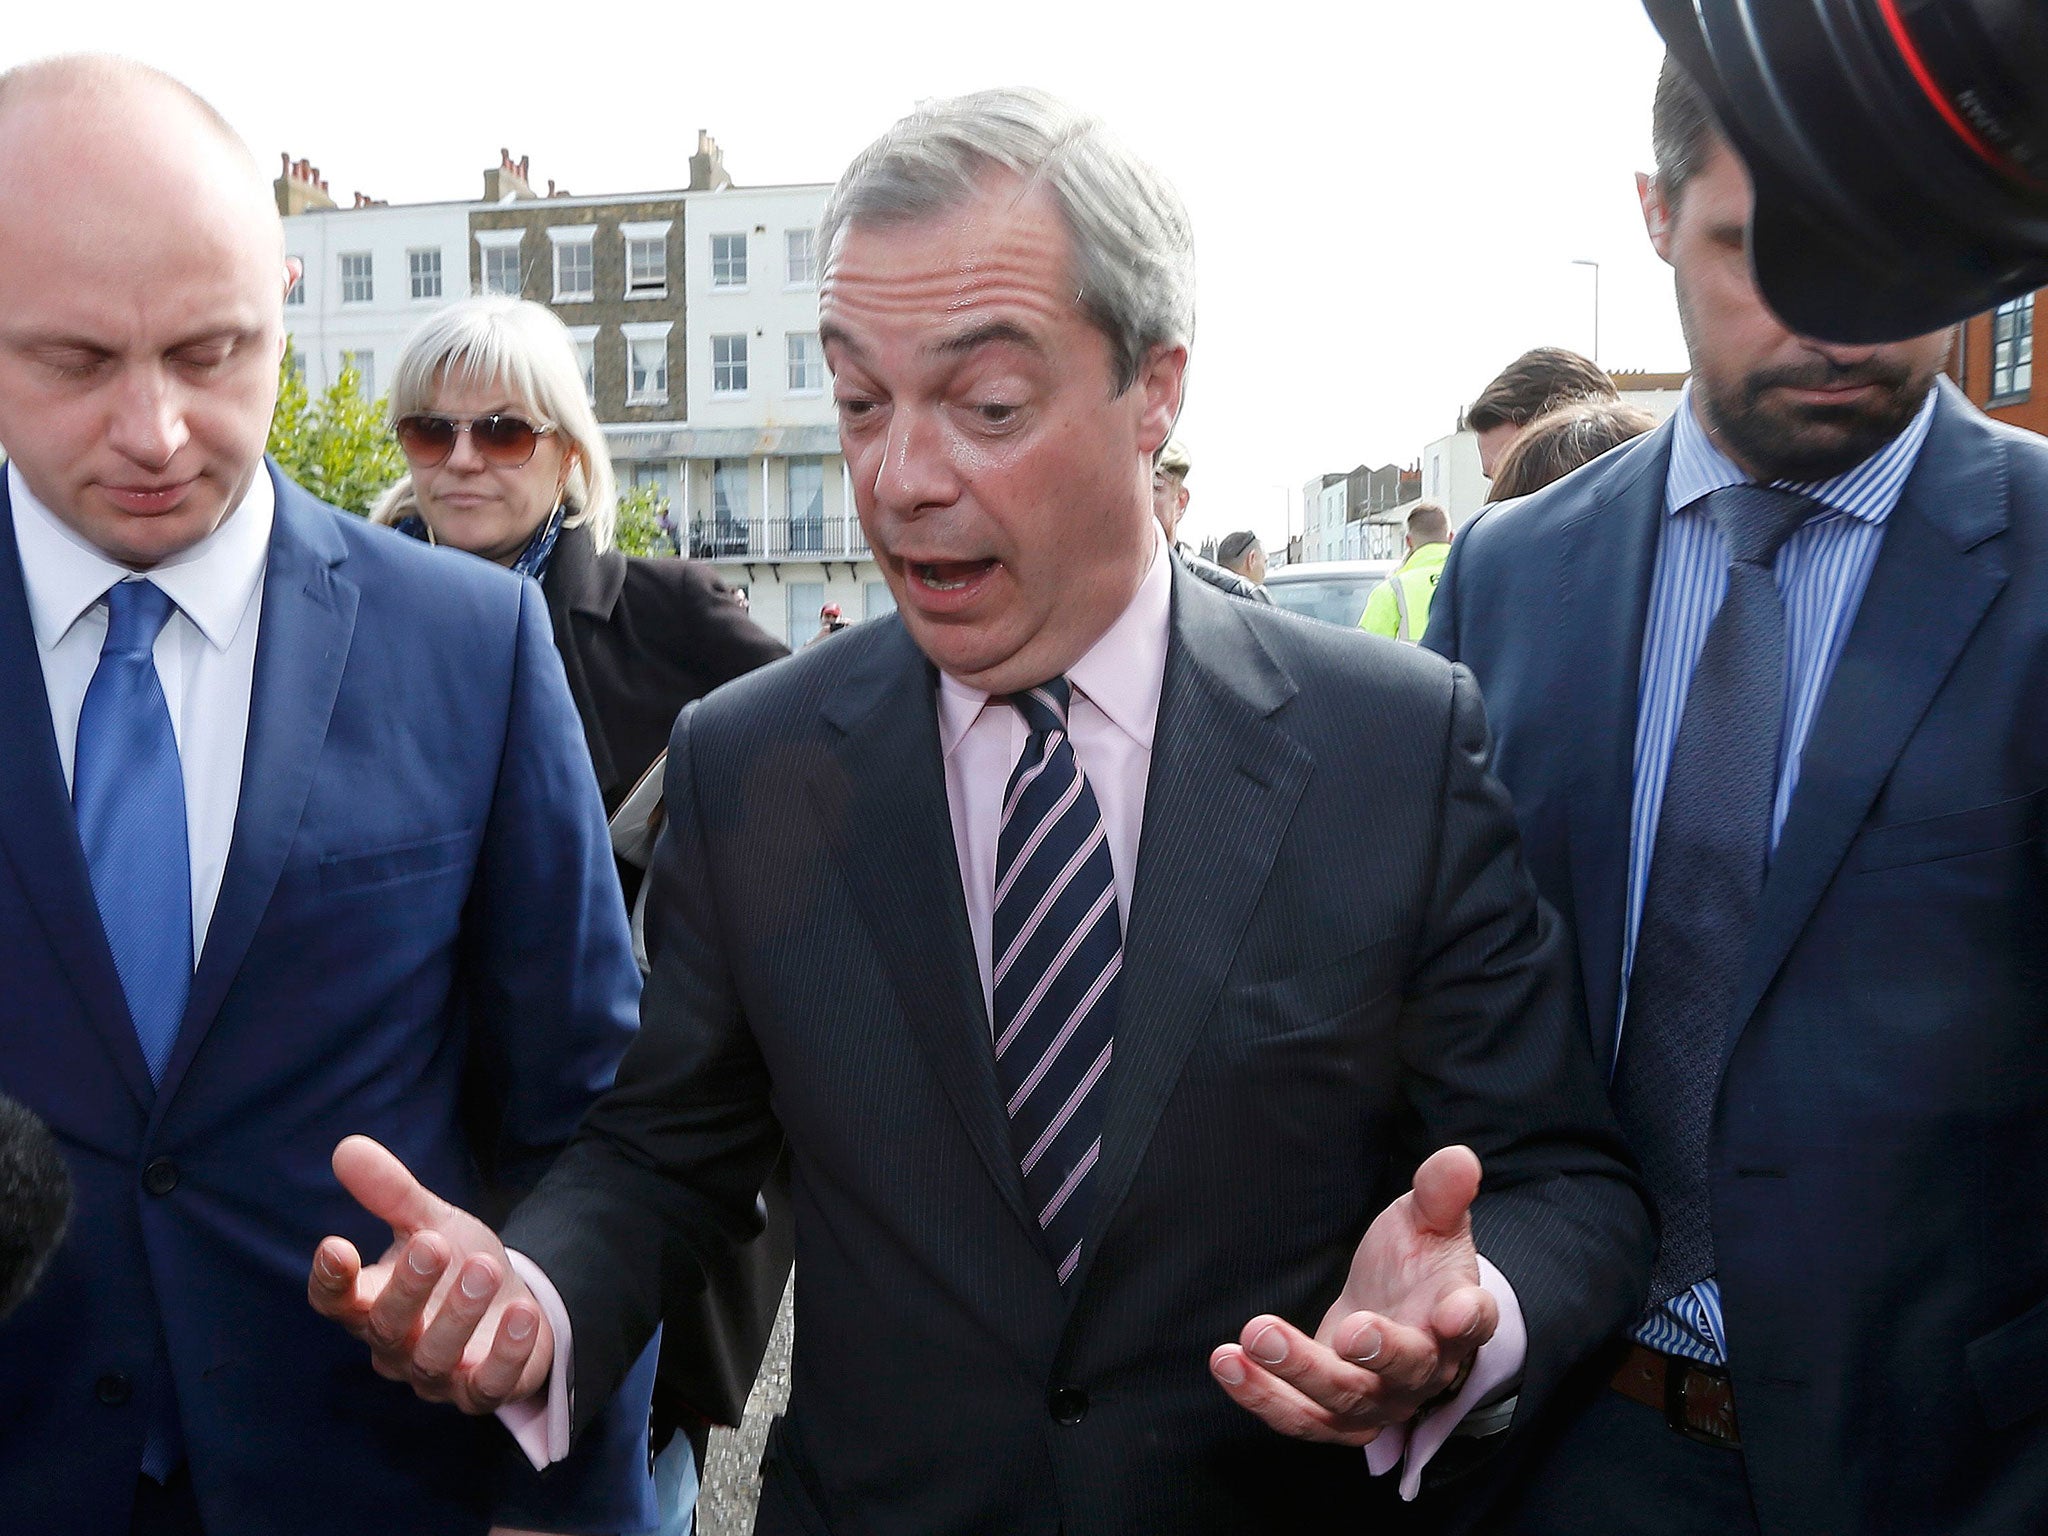 Nigel Farage, leader of the United Kingdom Independence Party (UKIP) arrives at Winter Gardens in Margate